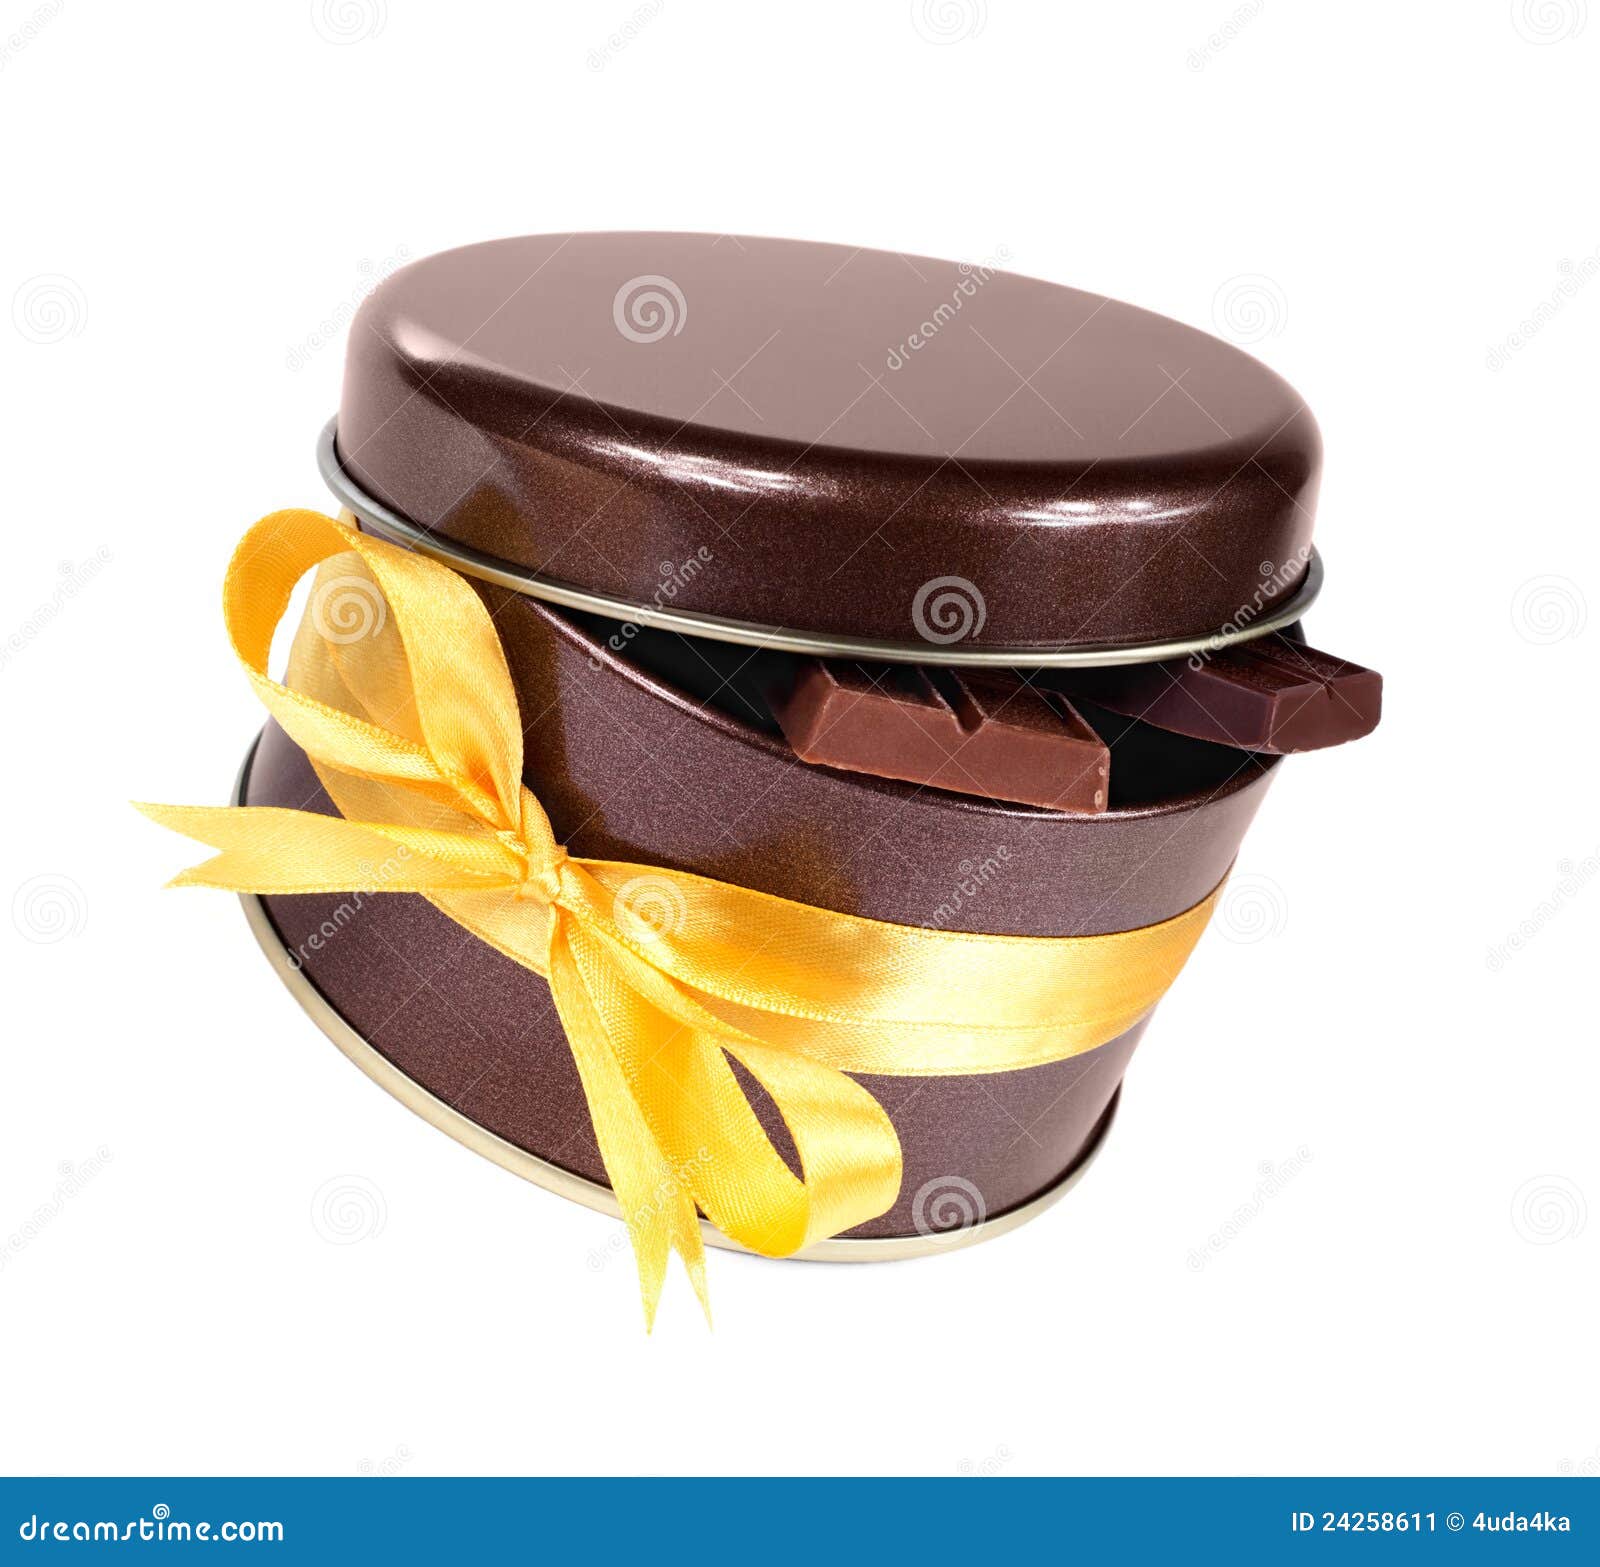 связанная тесемка шоколада коробки штанг. белизна коробки штанг изолированная шоколадом связанная тесемкой